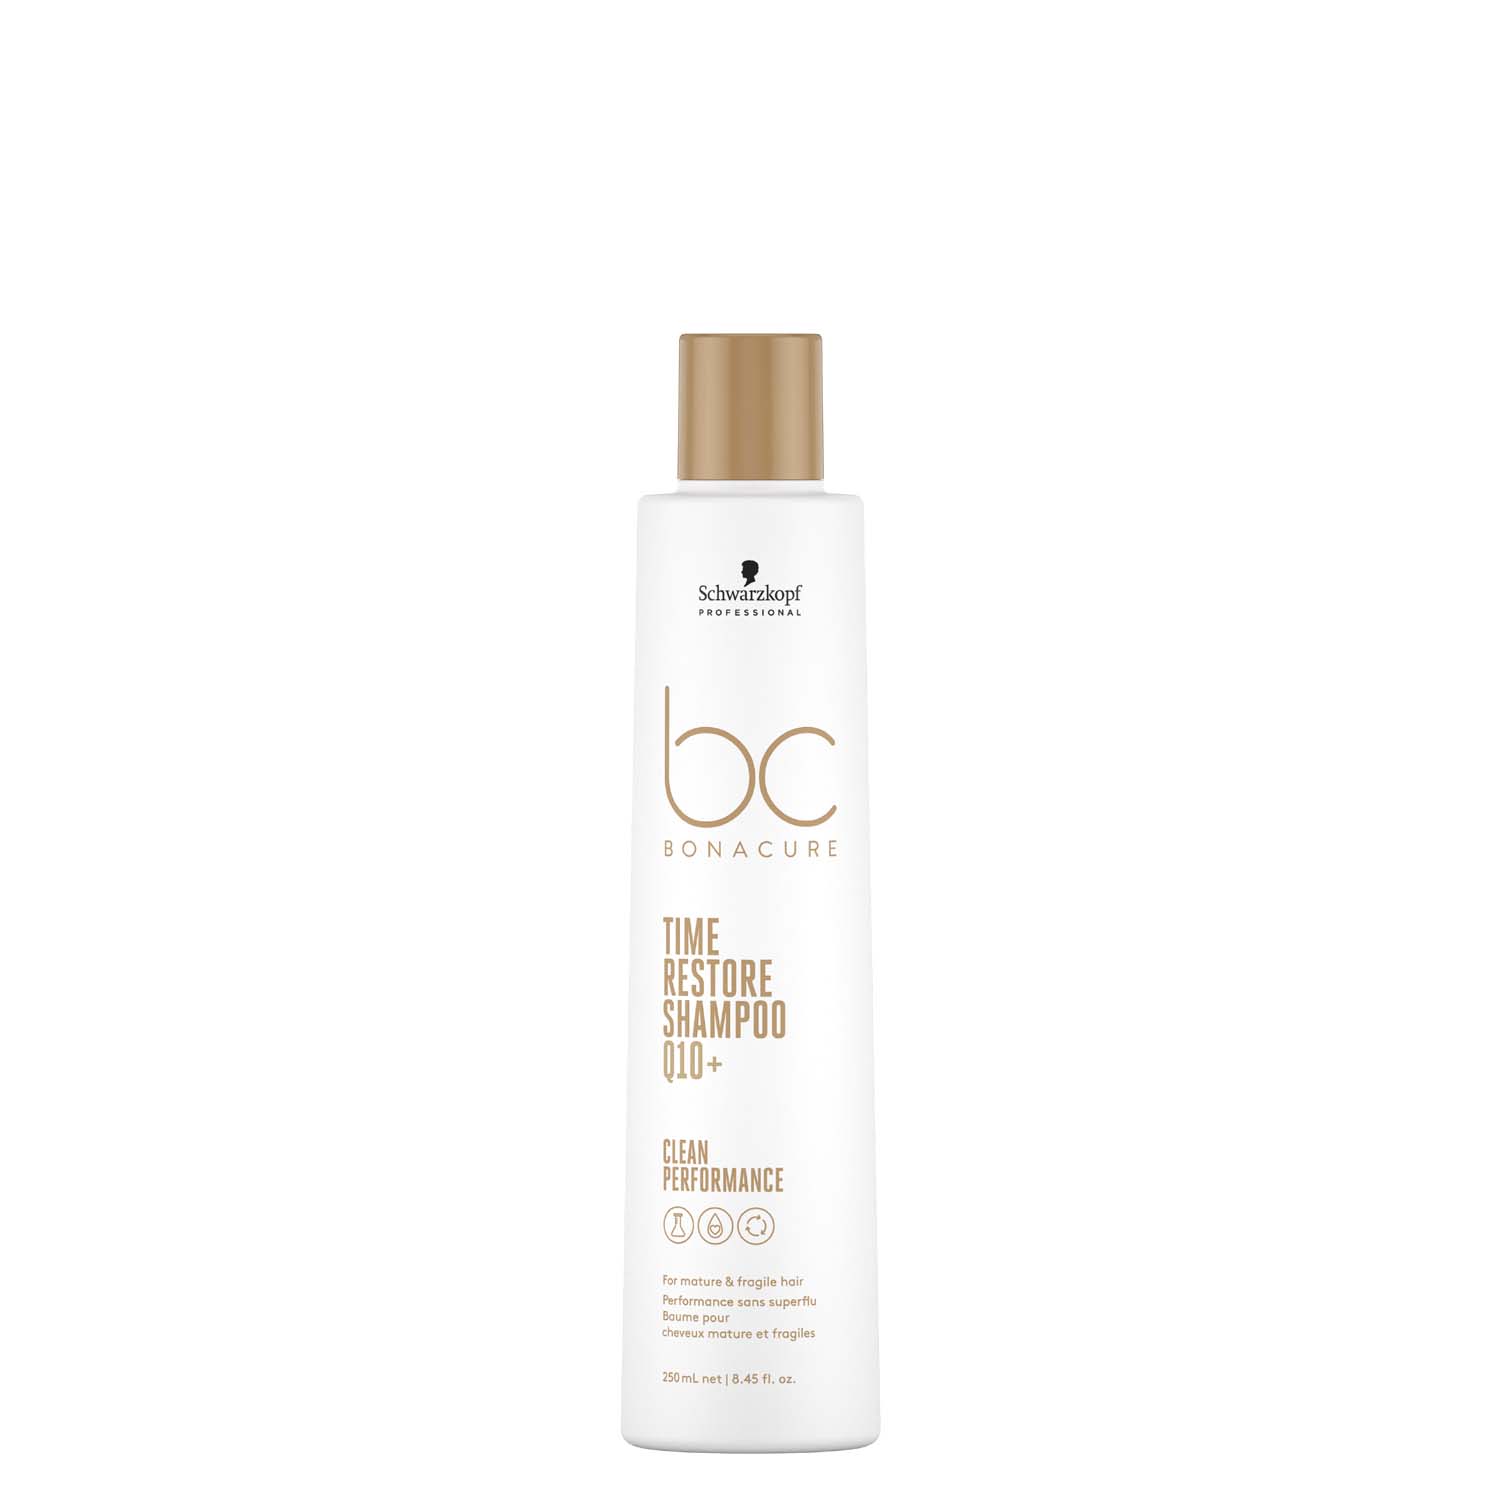 Bona Cure Q10+ Time Restore Shampoo